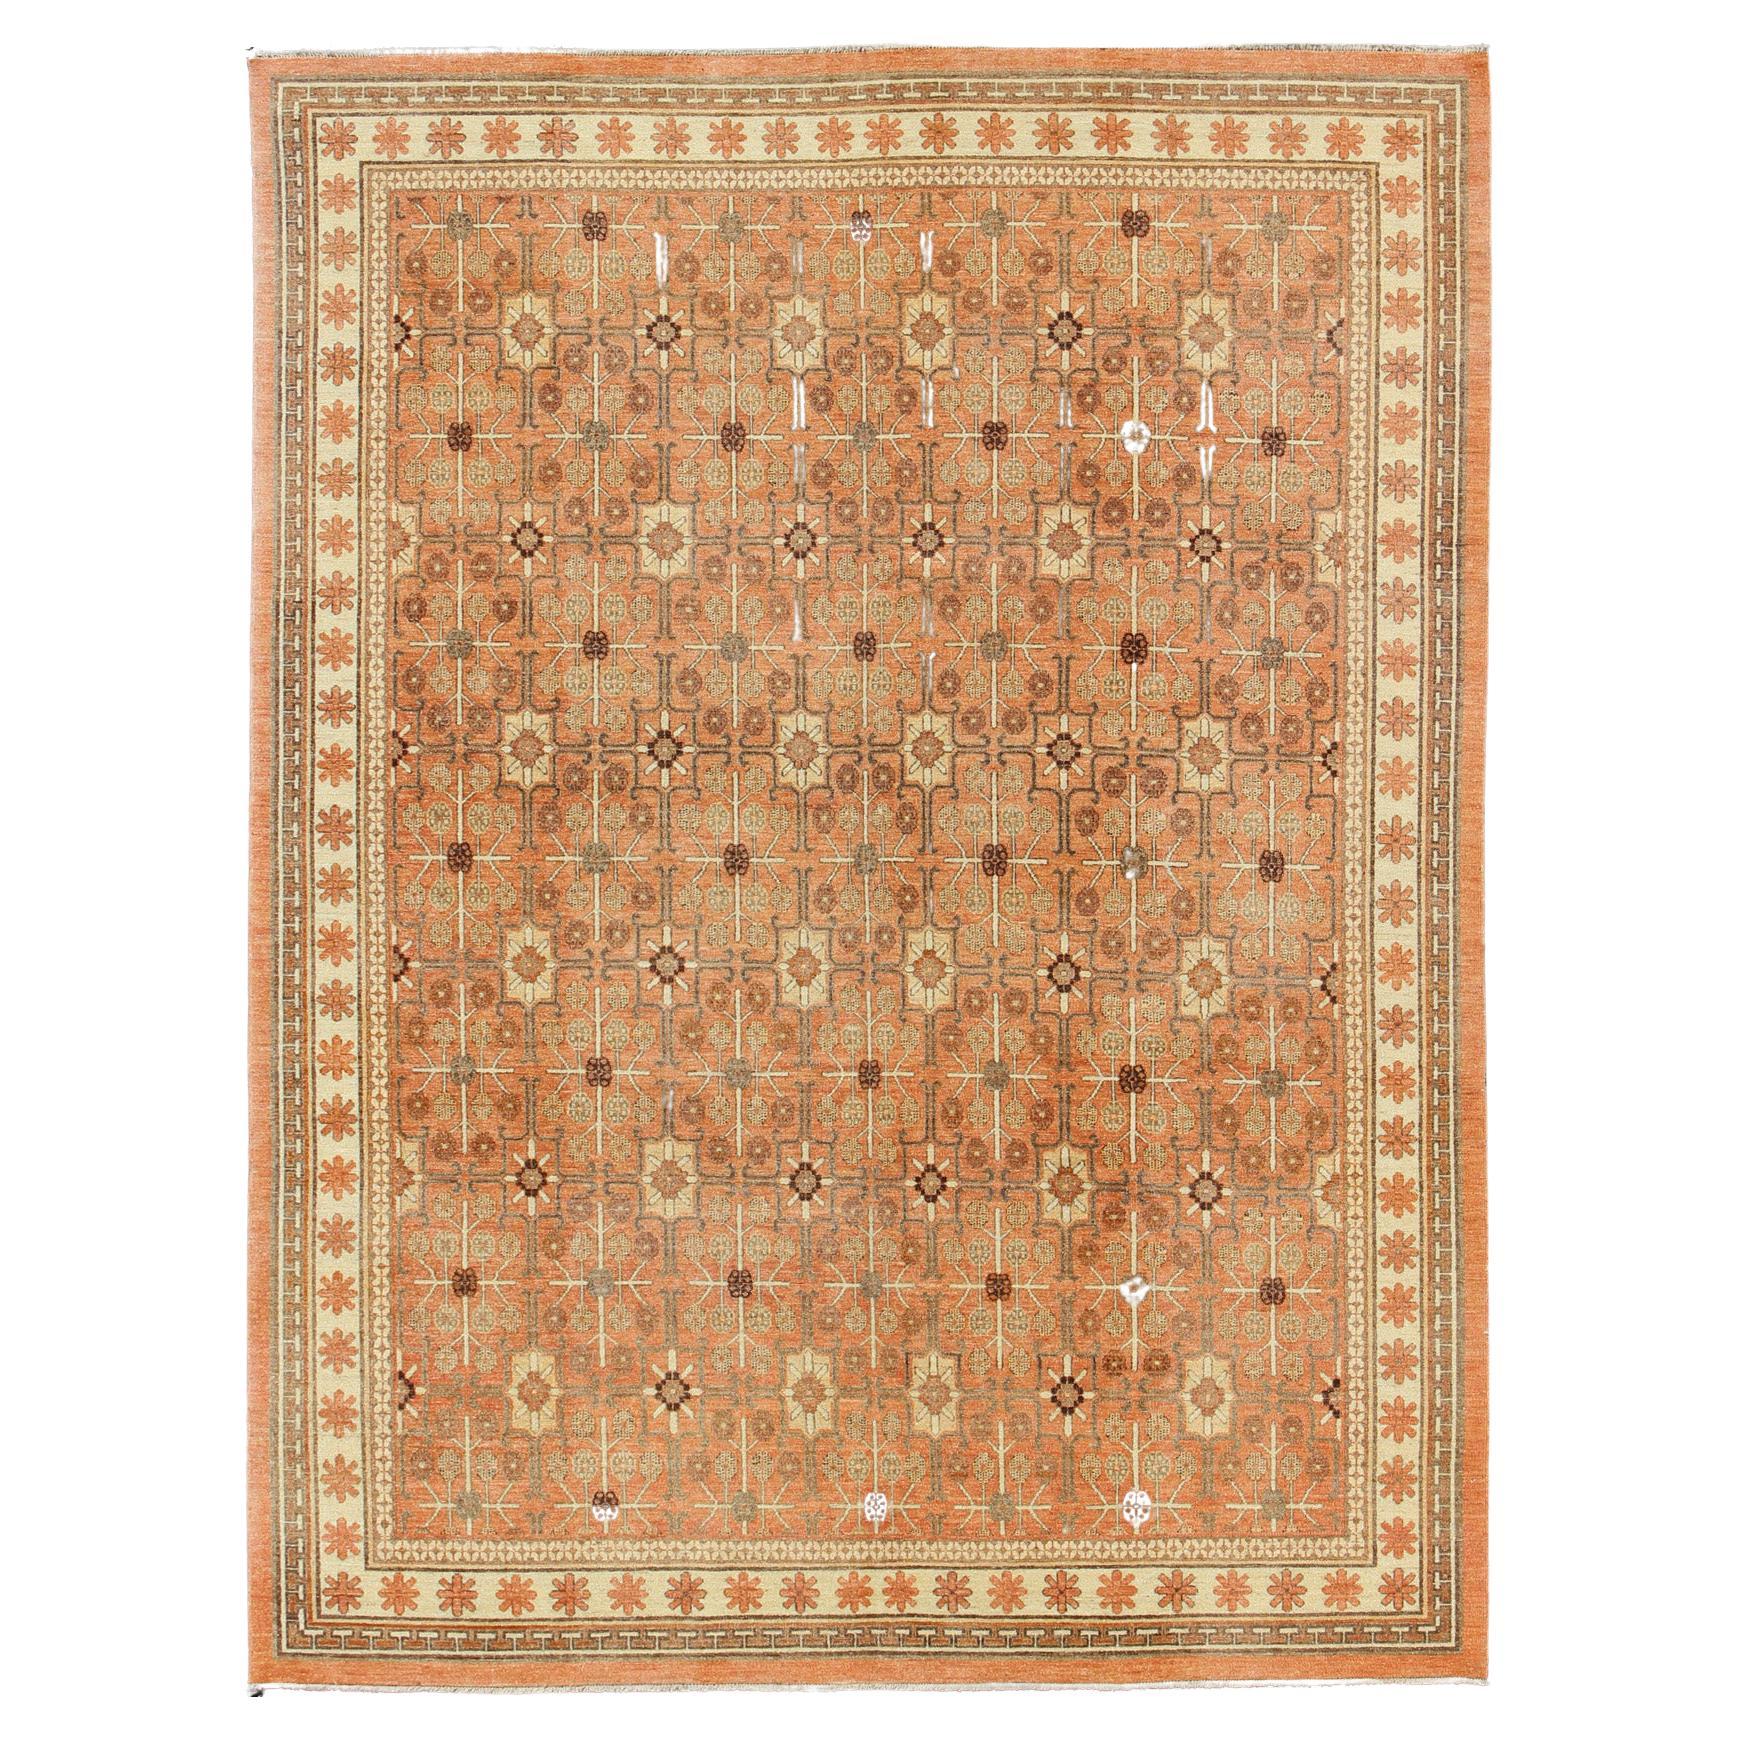 All-Over Design Khotan Rug in Light Tangerine Background. Charcoal, Brown, Green